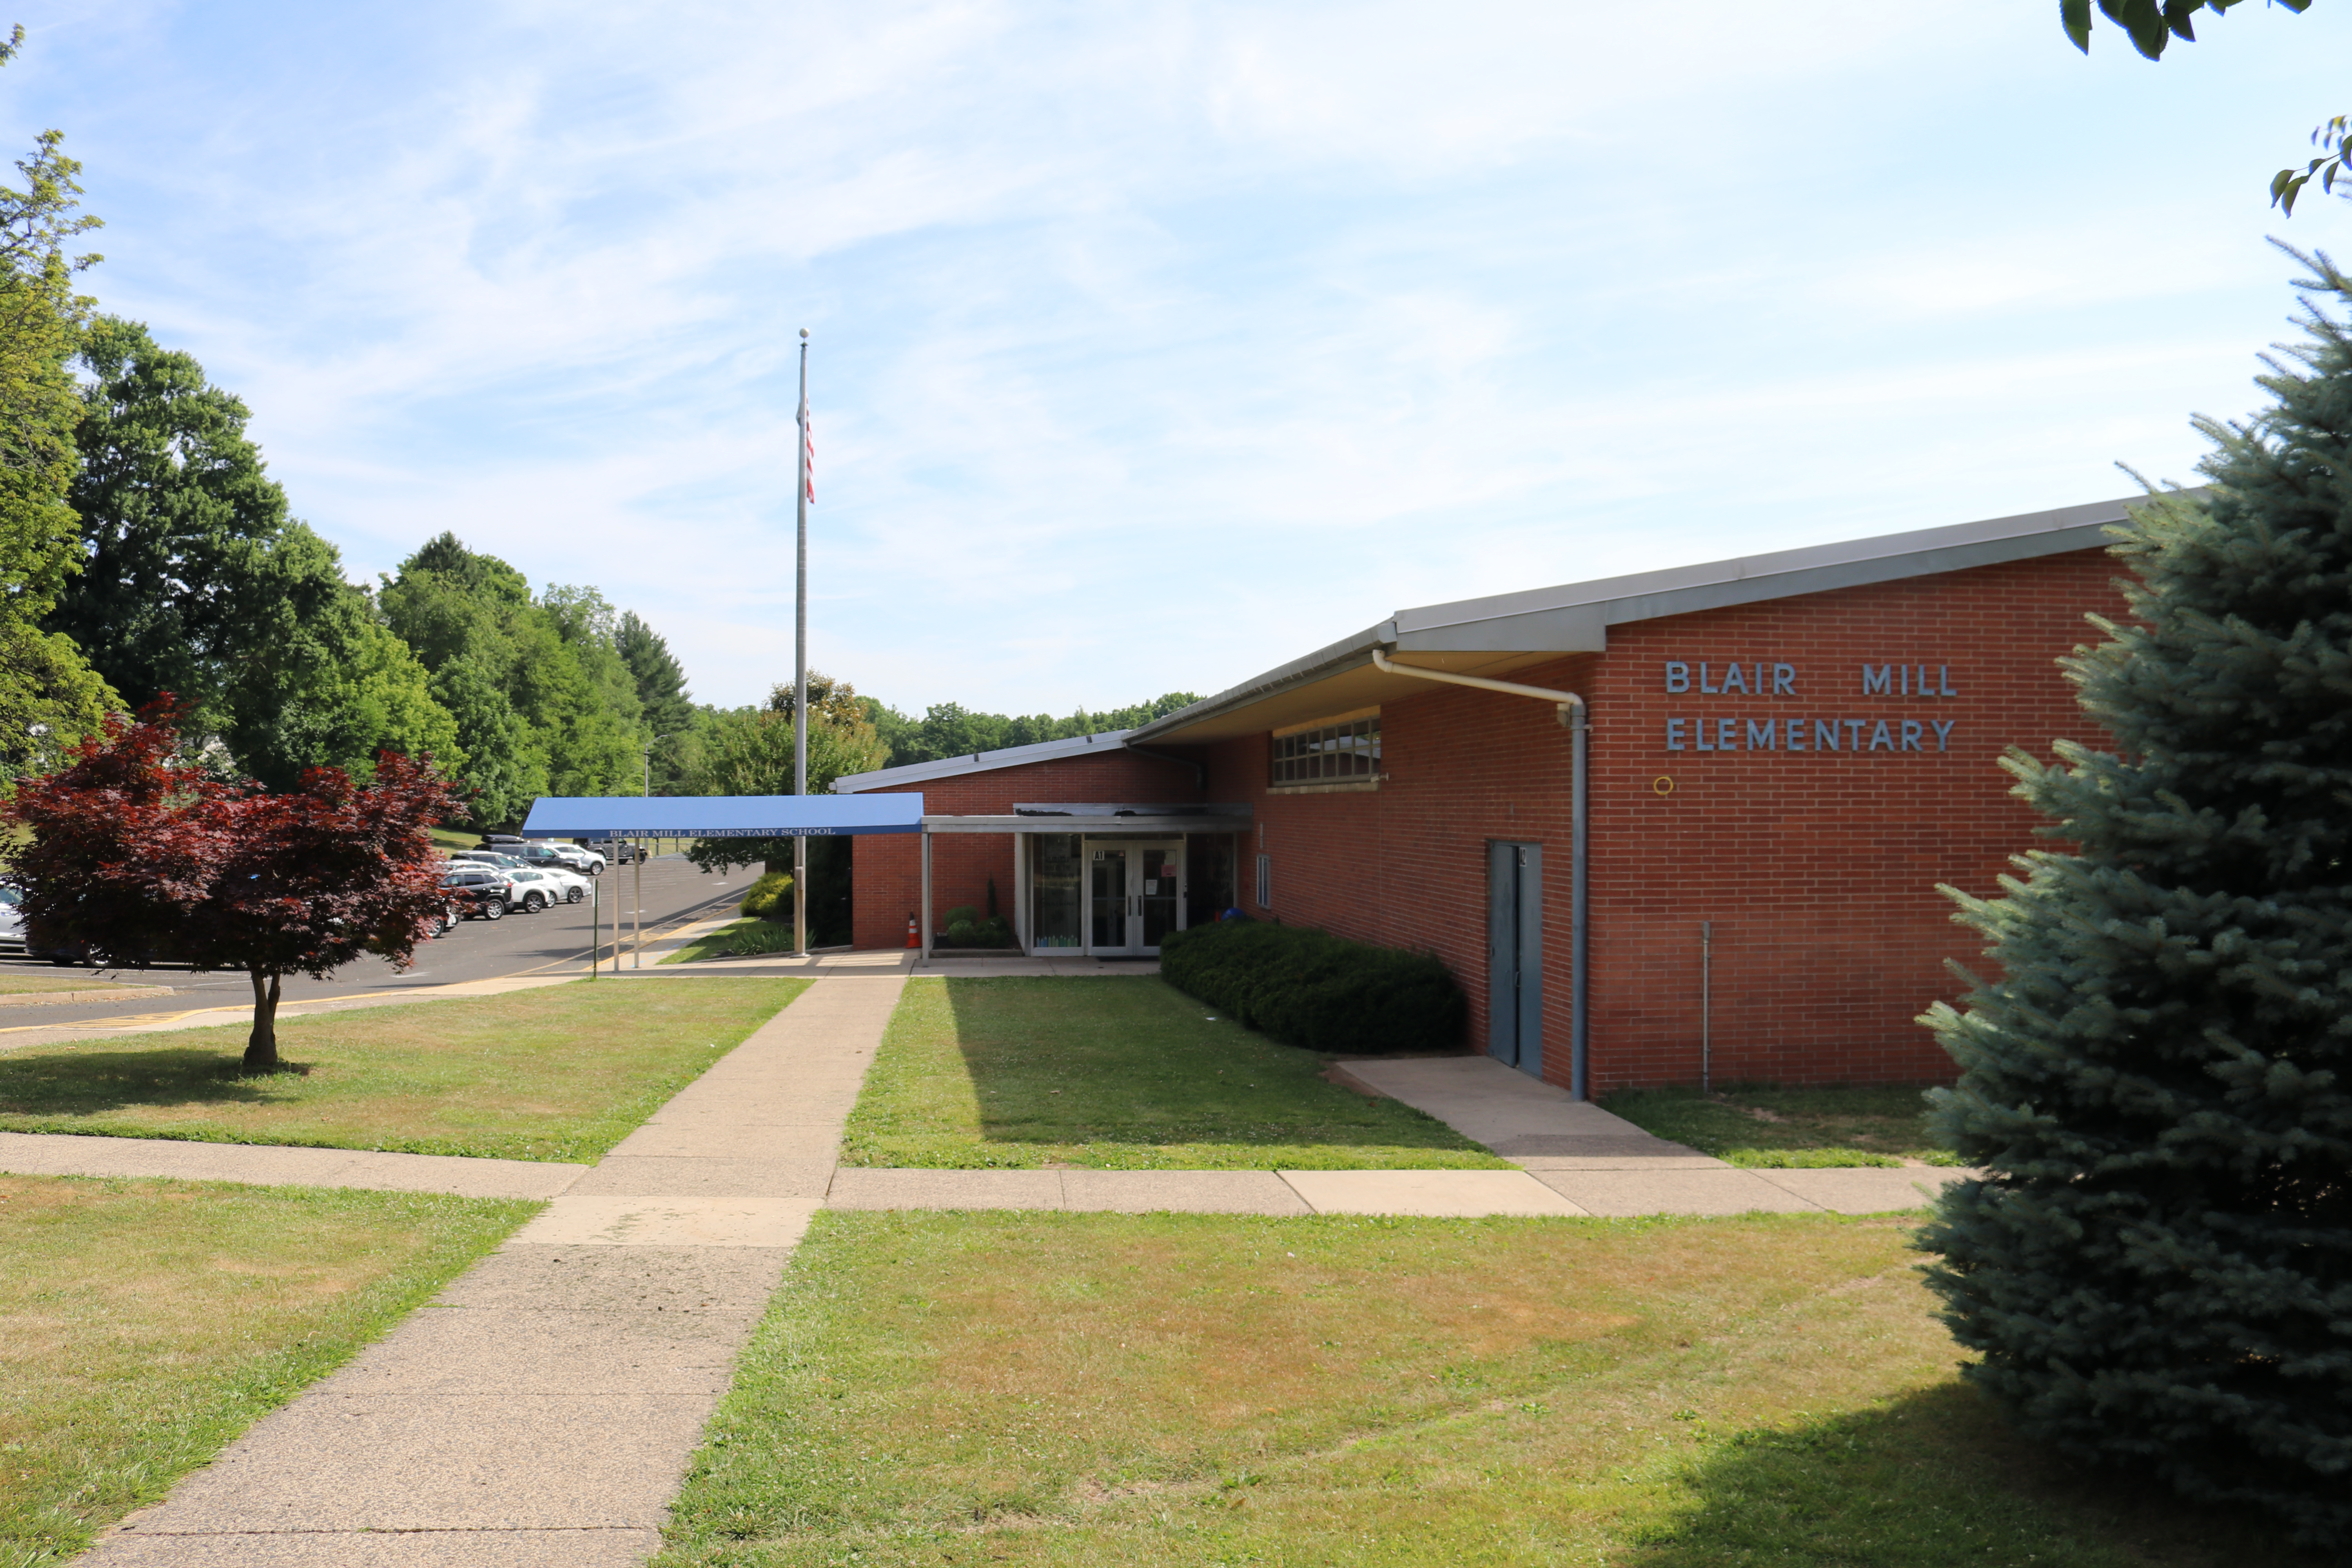 Blair Mill Elementary School